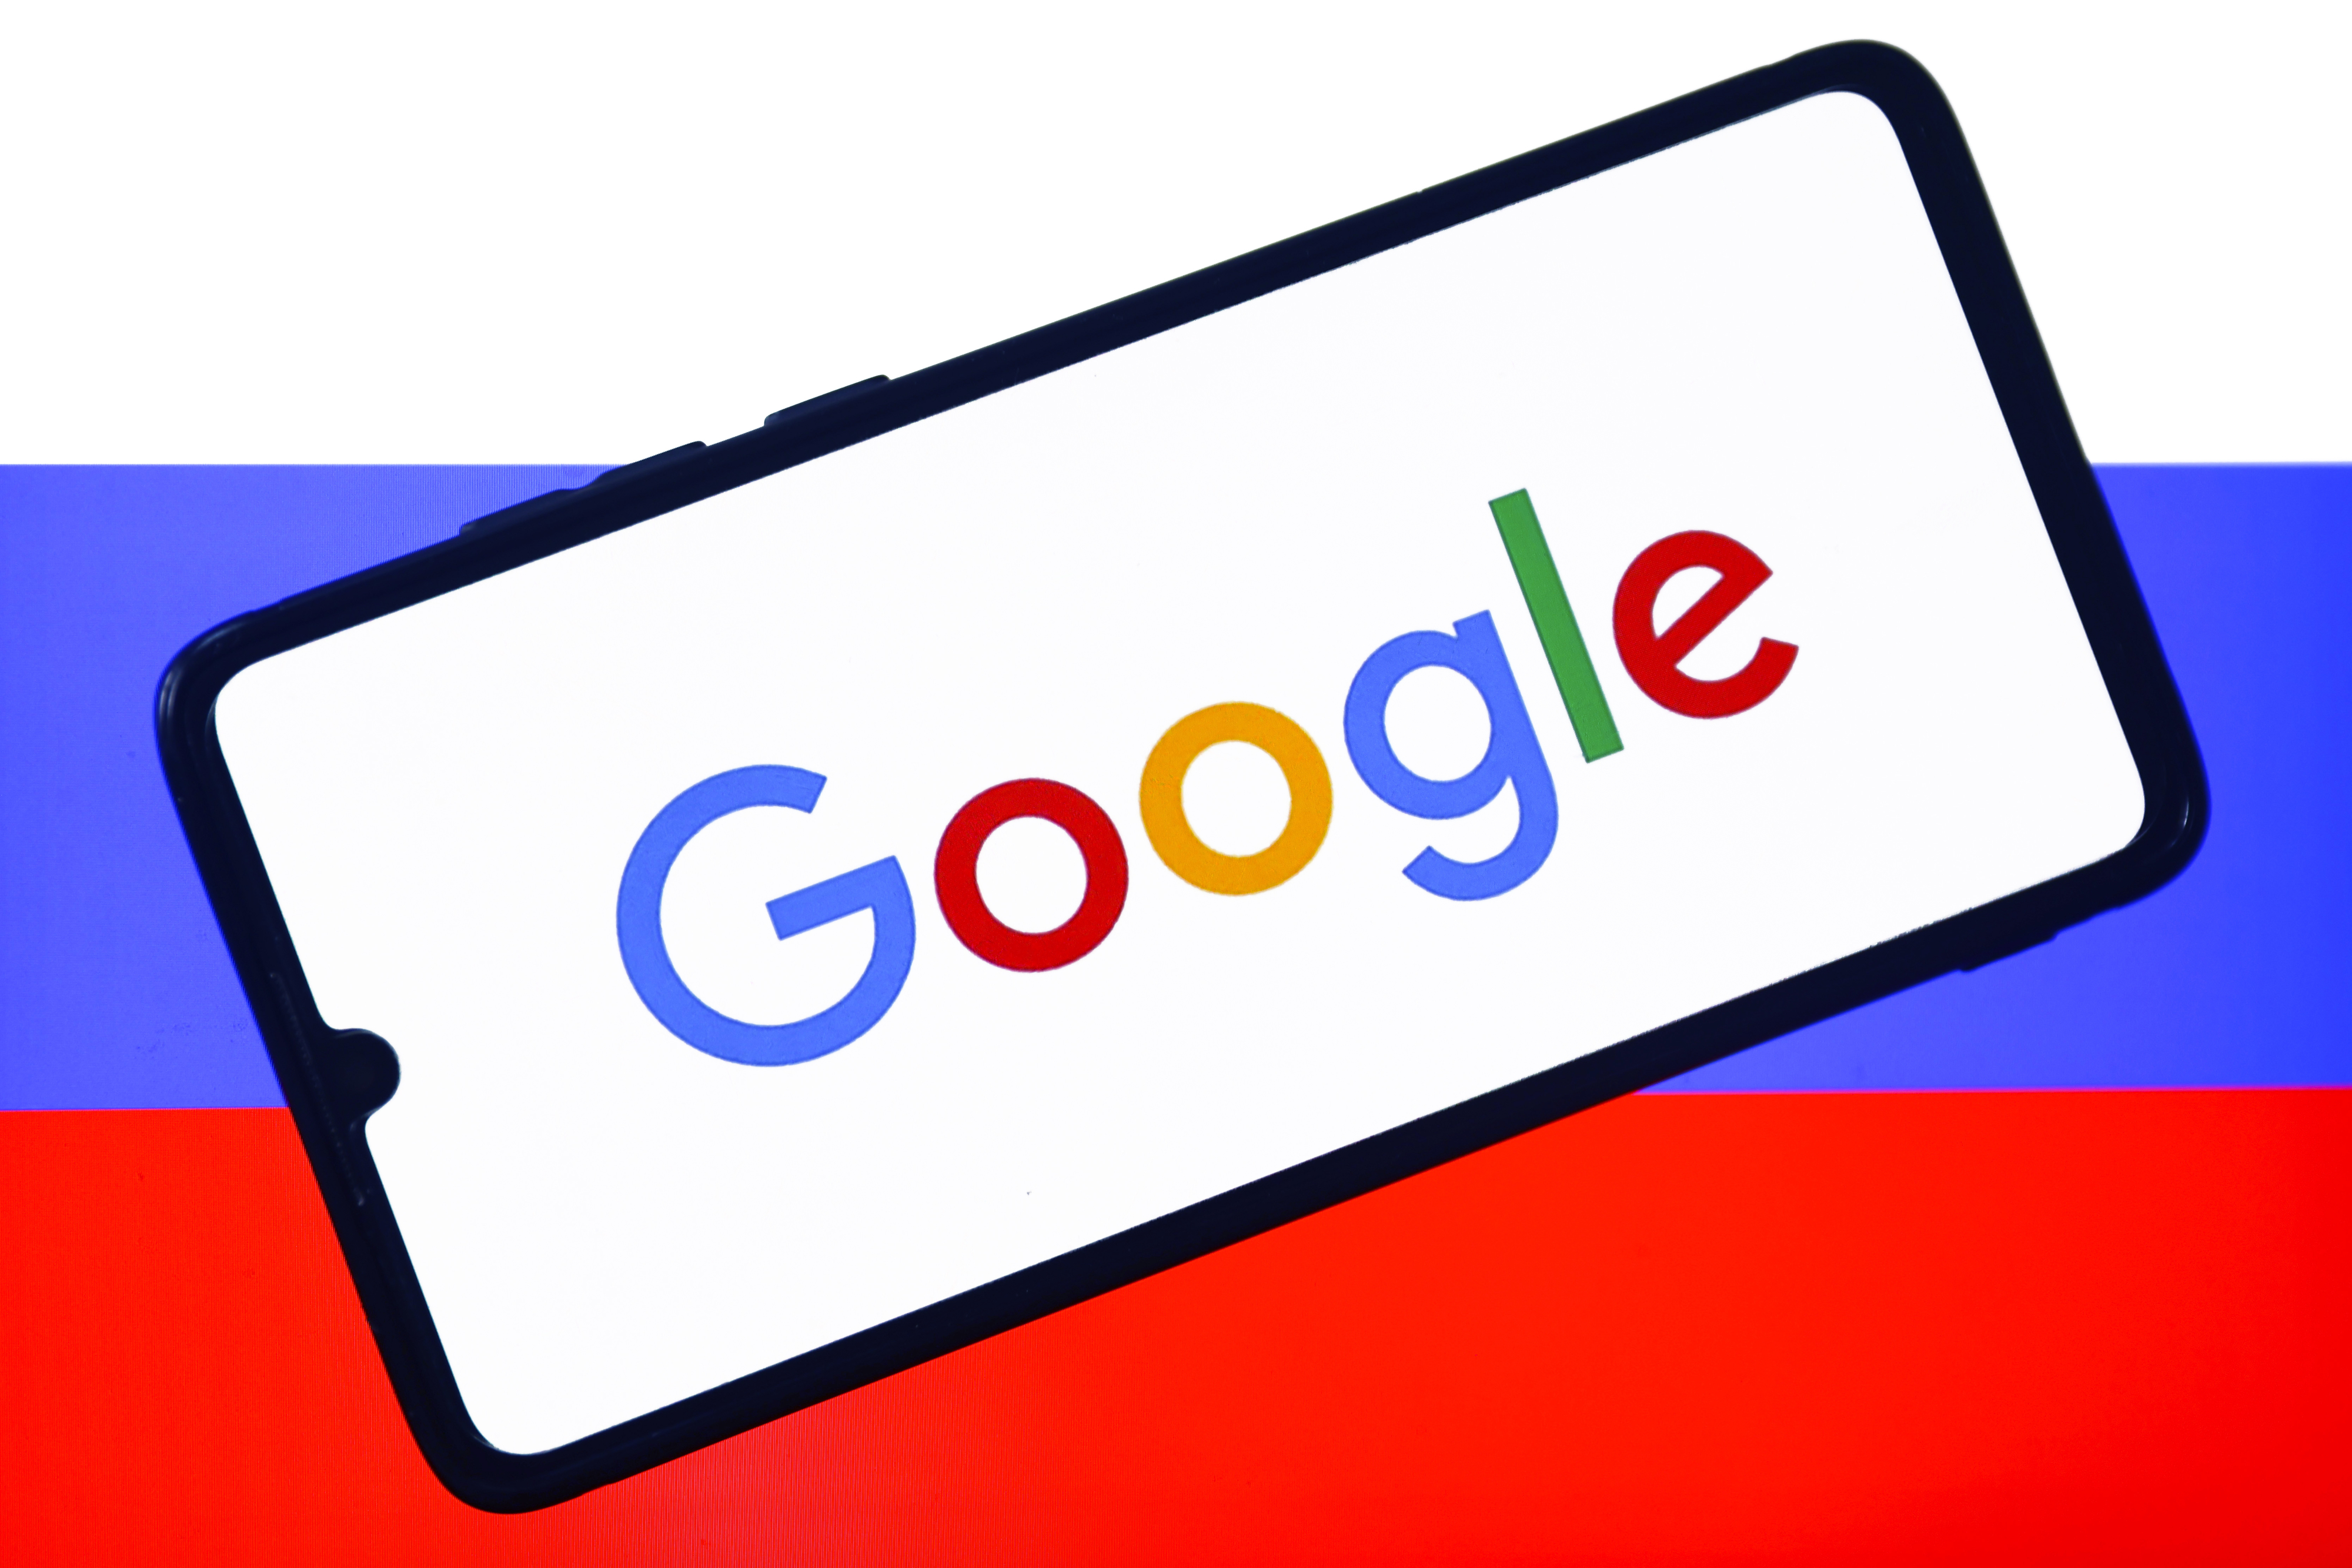 Close-up of the Google logo